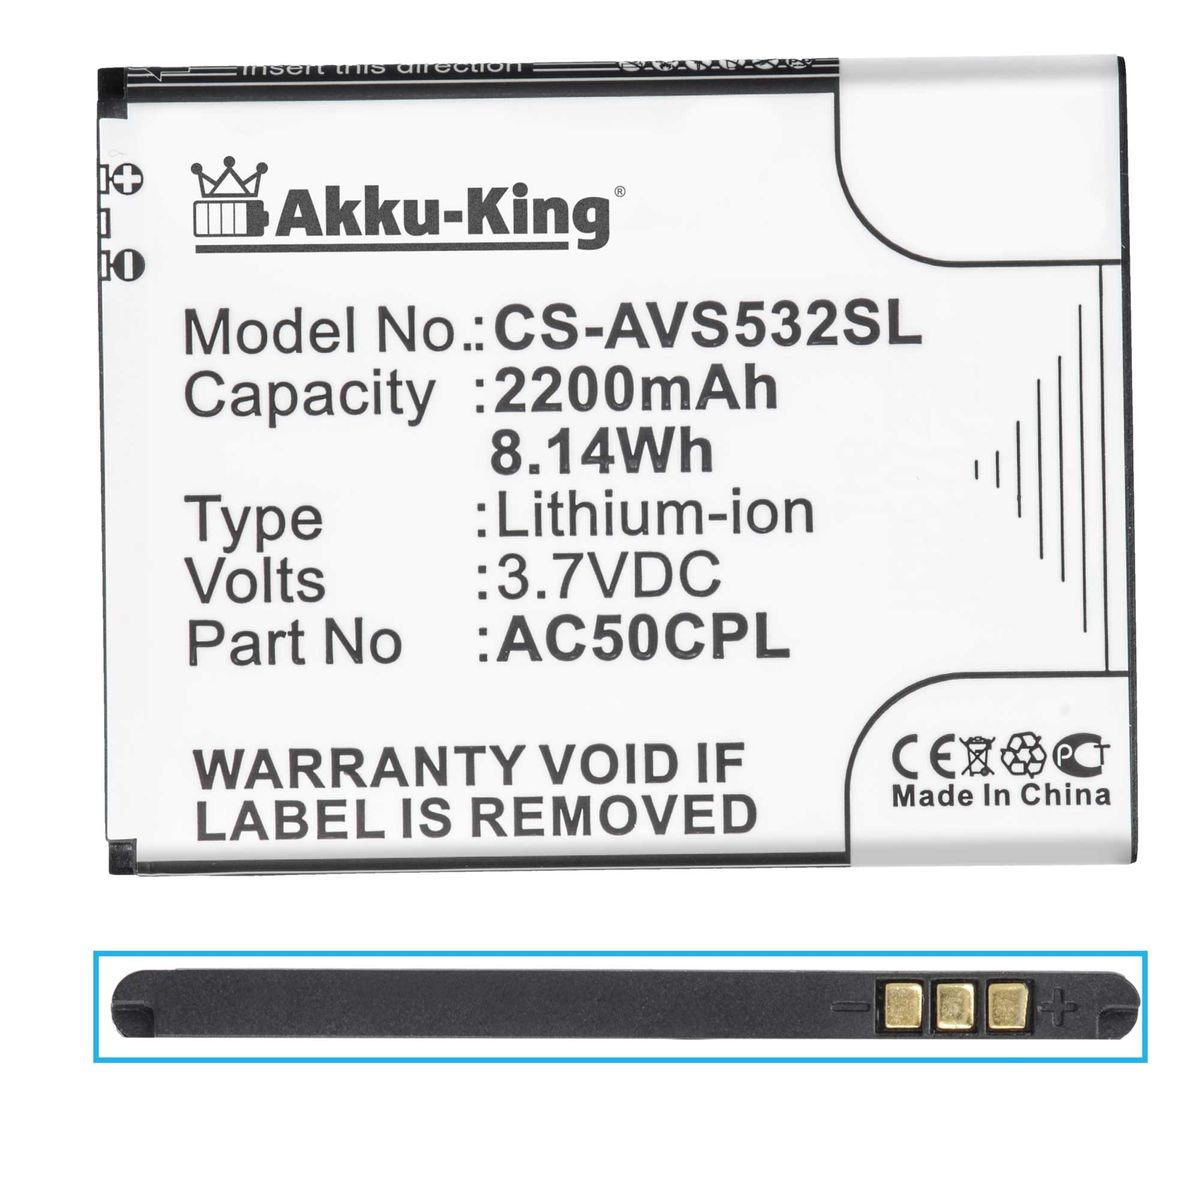 Archos Li-Ion AKKU-KING AC50CPL für 2200mAh 3.7 Handy-Akku, Akku Volt,